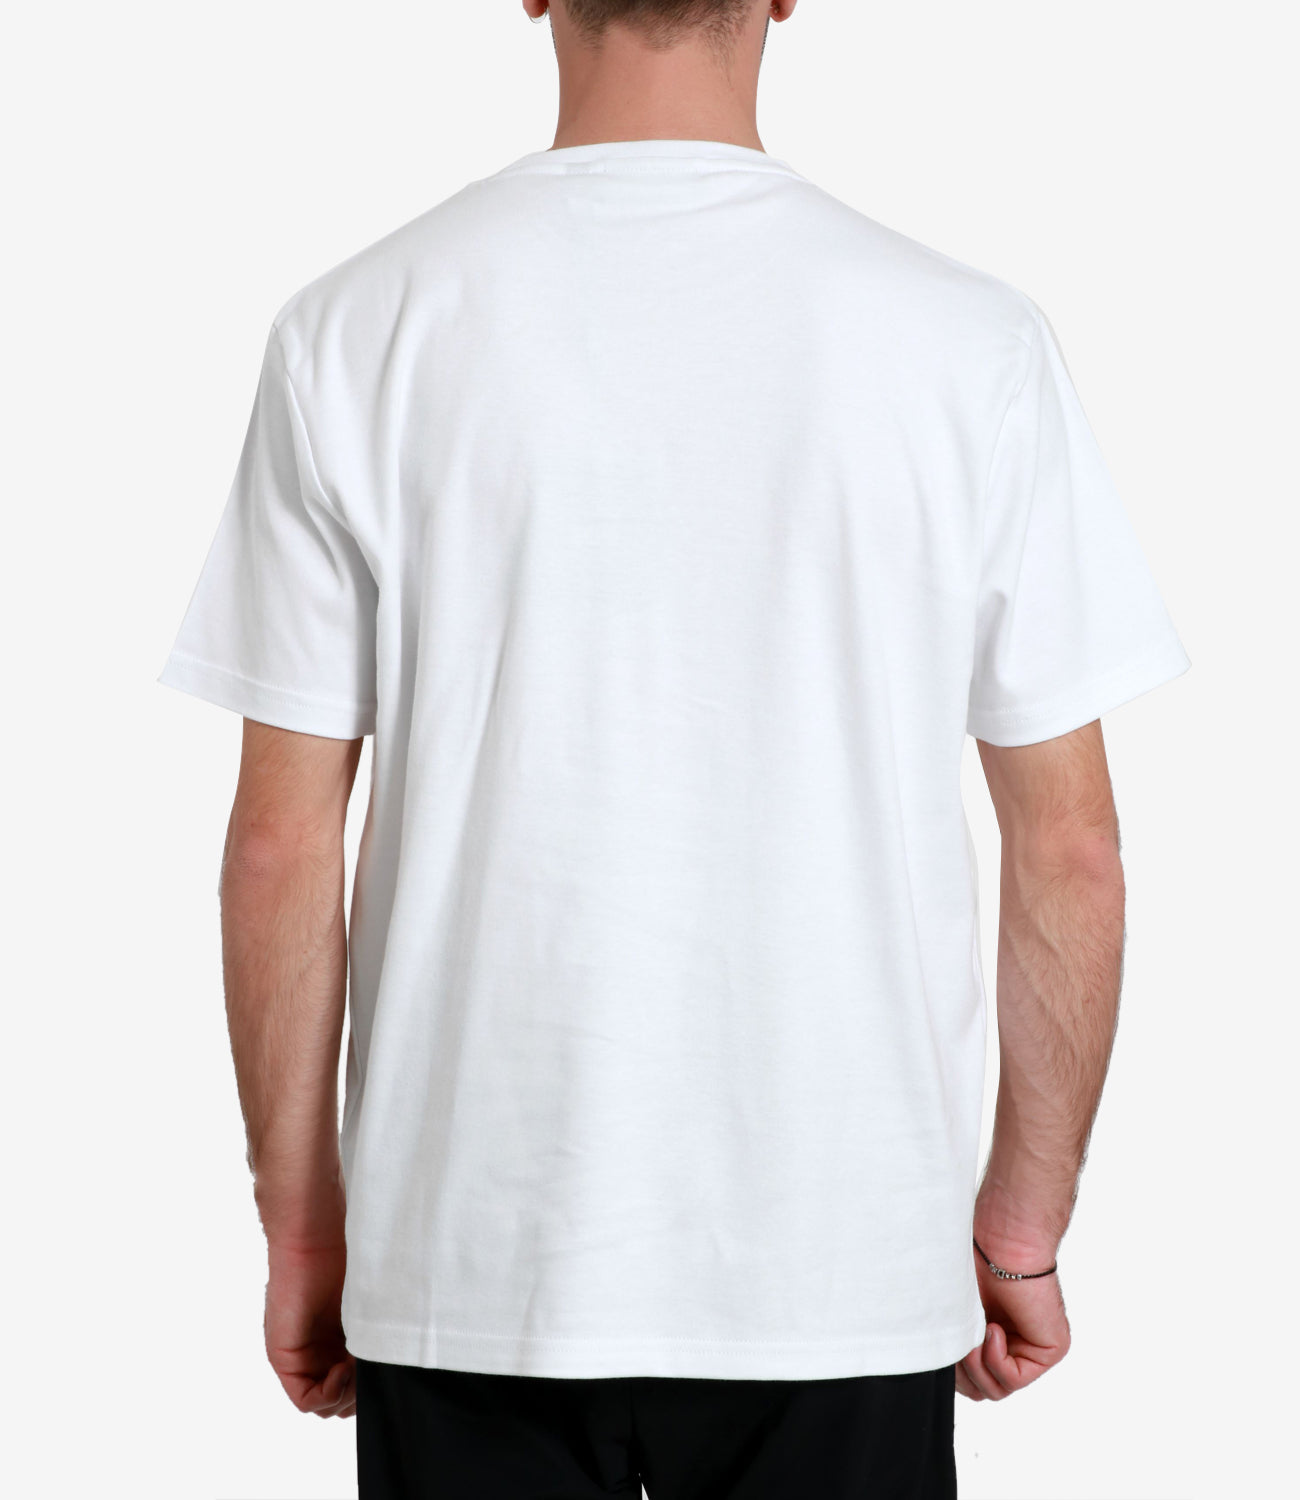 GCDS | Basic Logo Regular T-Shirt White